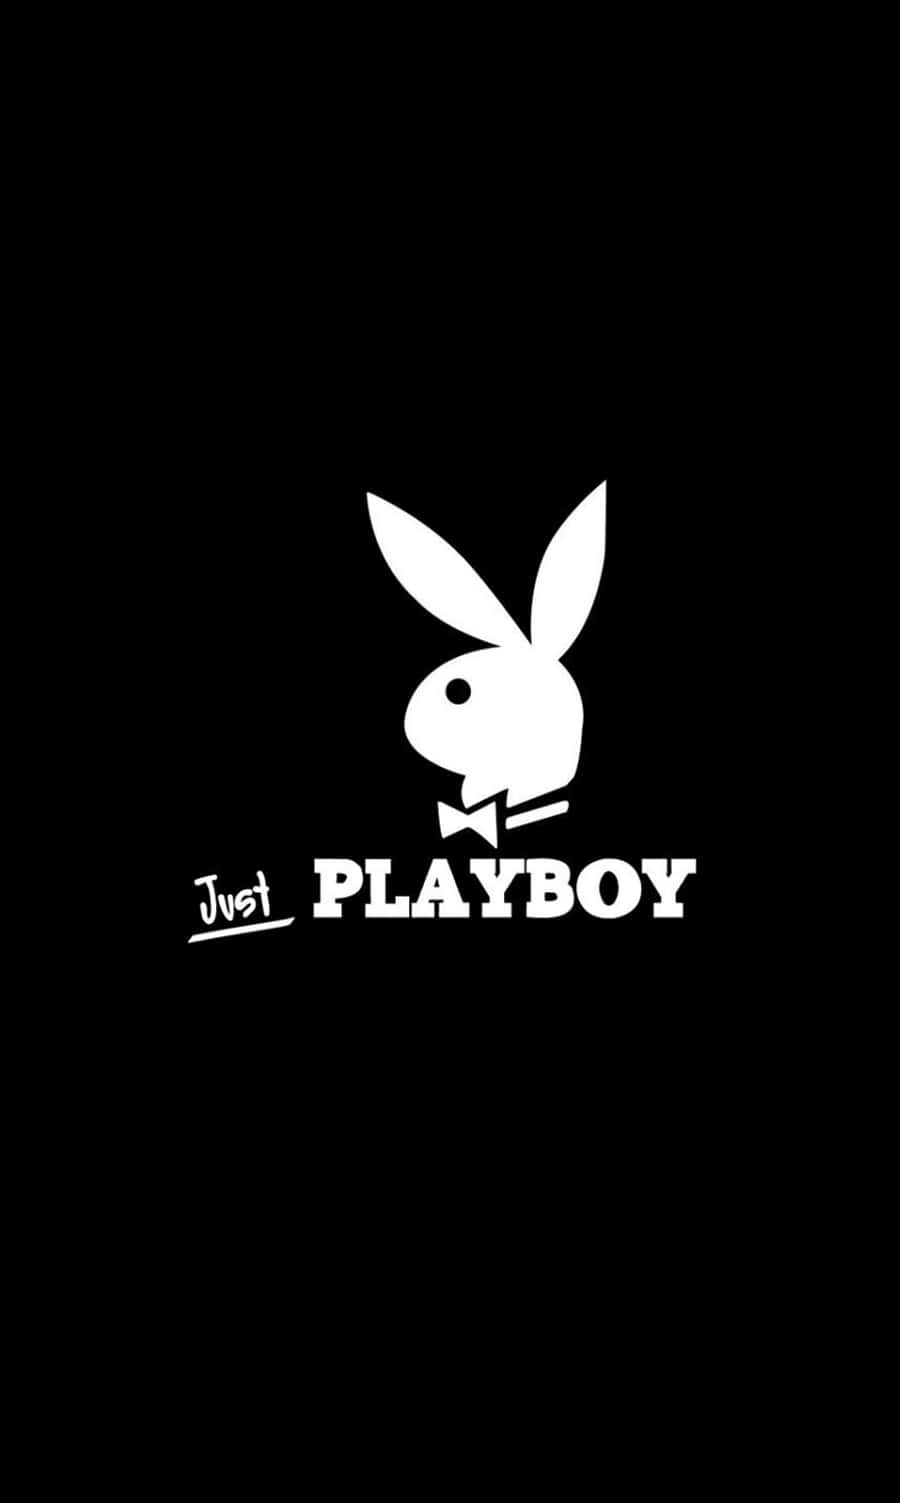 Playboy Logo On A Black Background Wallpaper